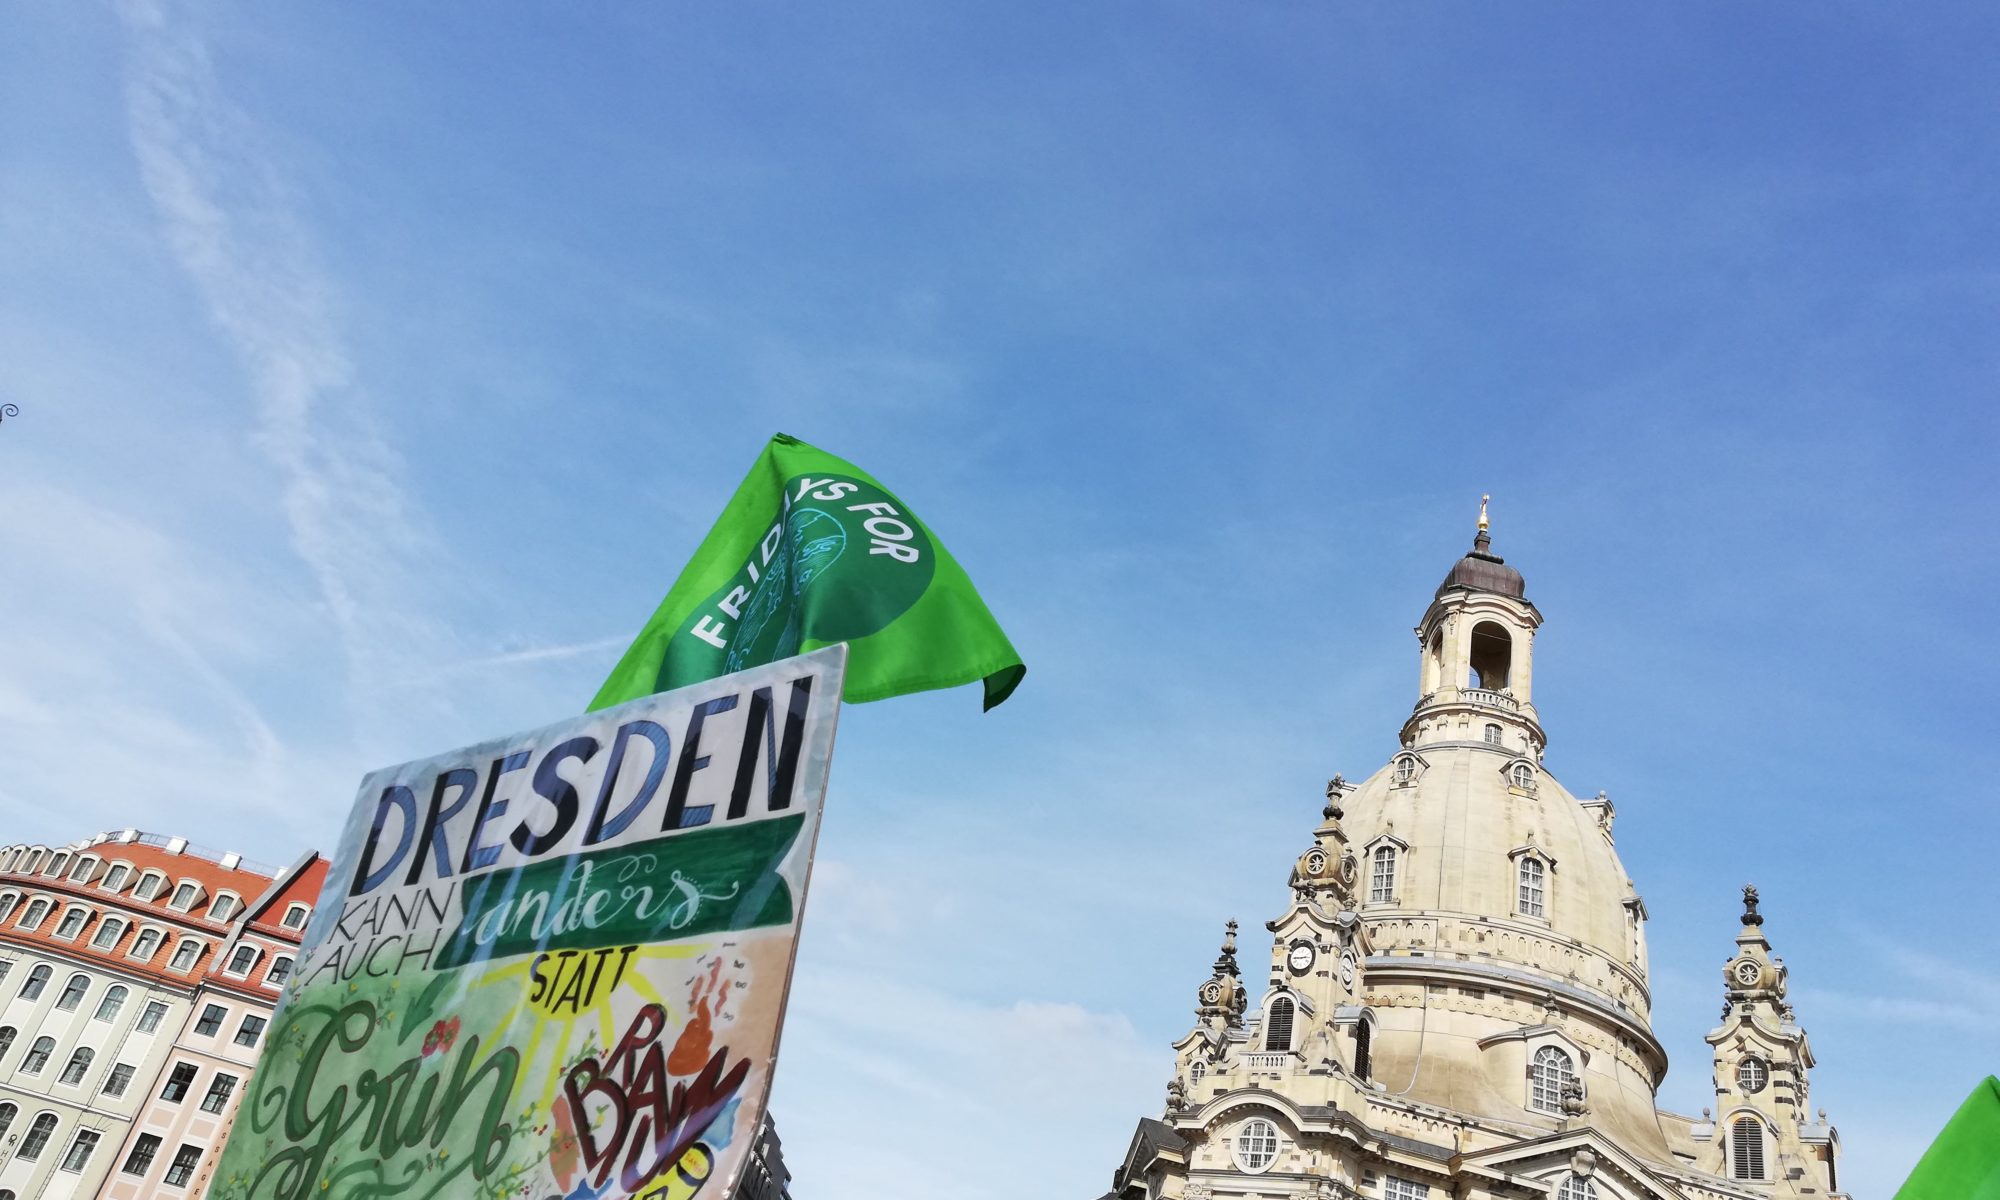 Demoschild: Dresden kann auch anders, grün statt braun